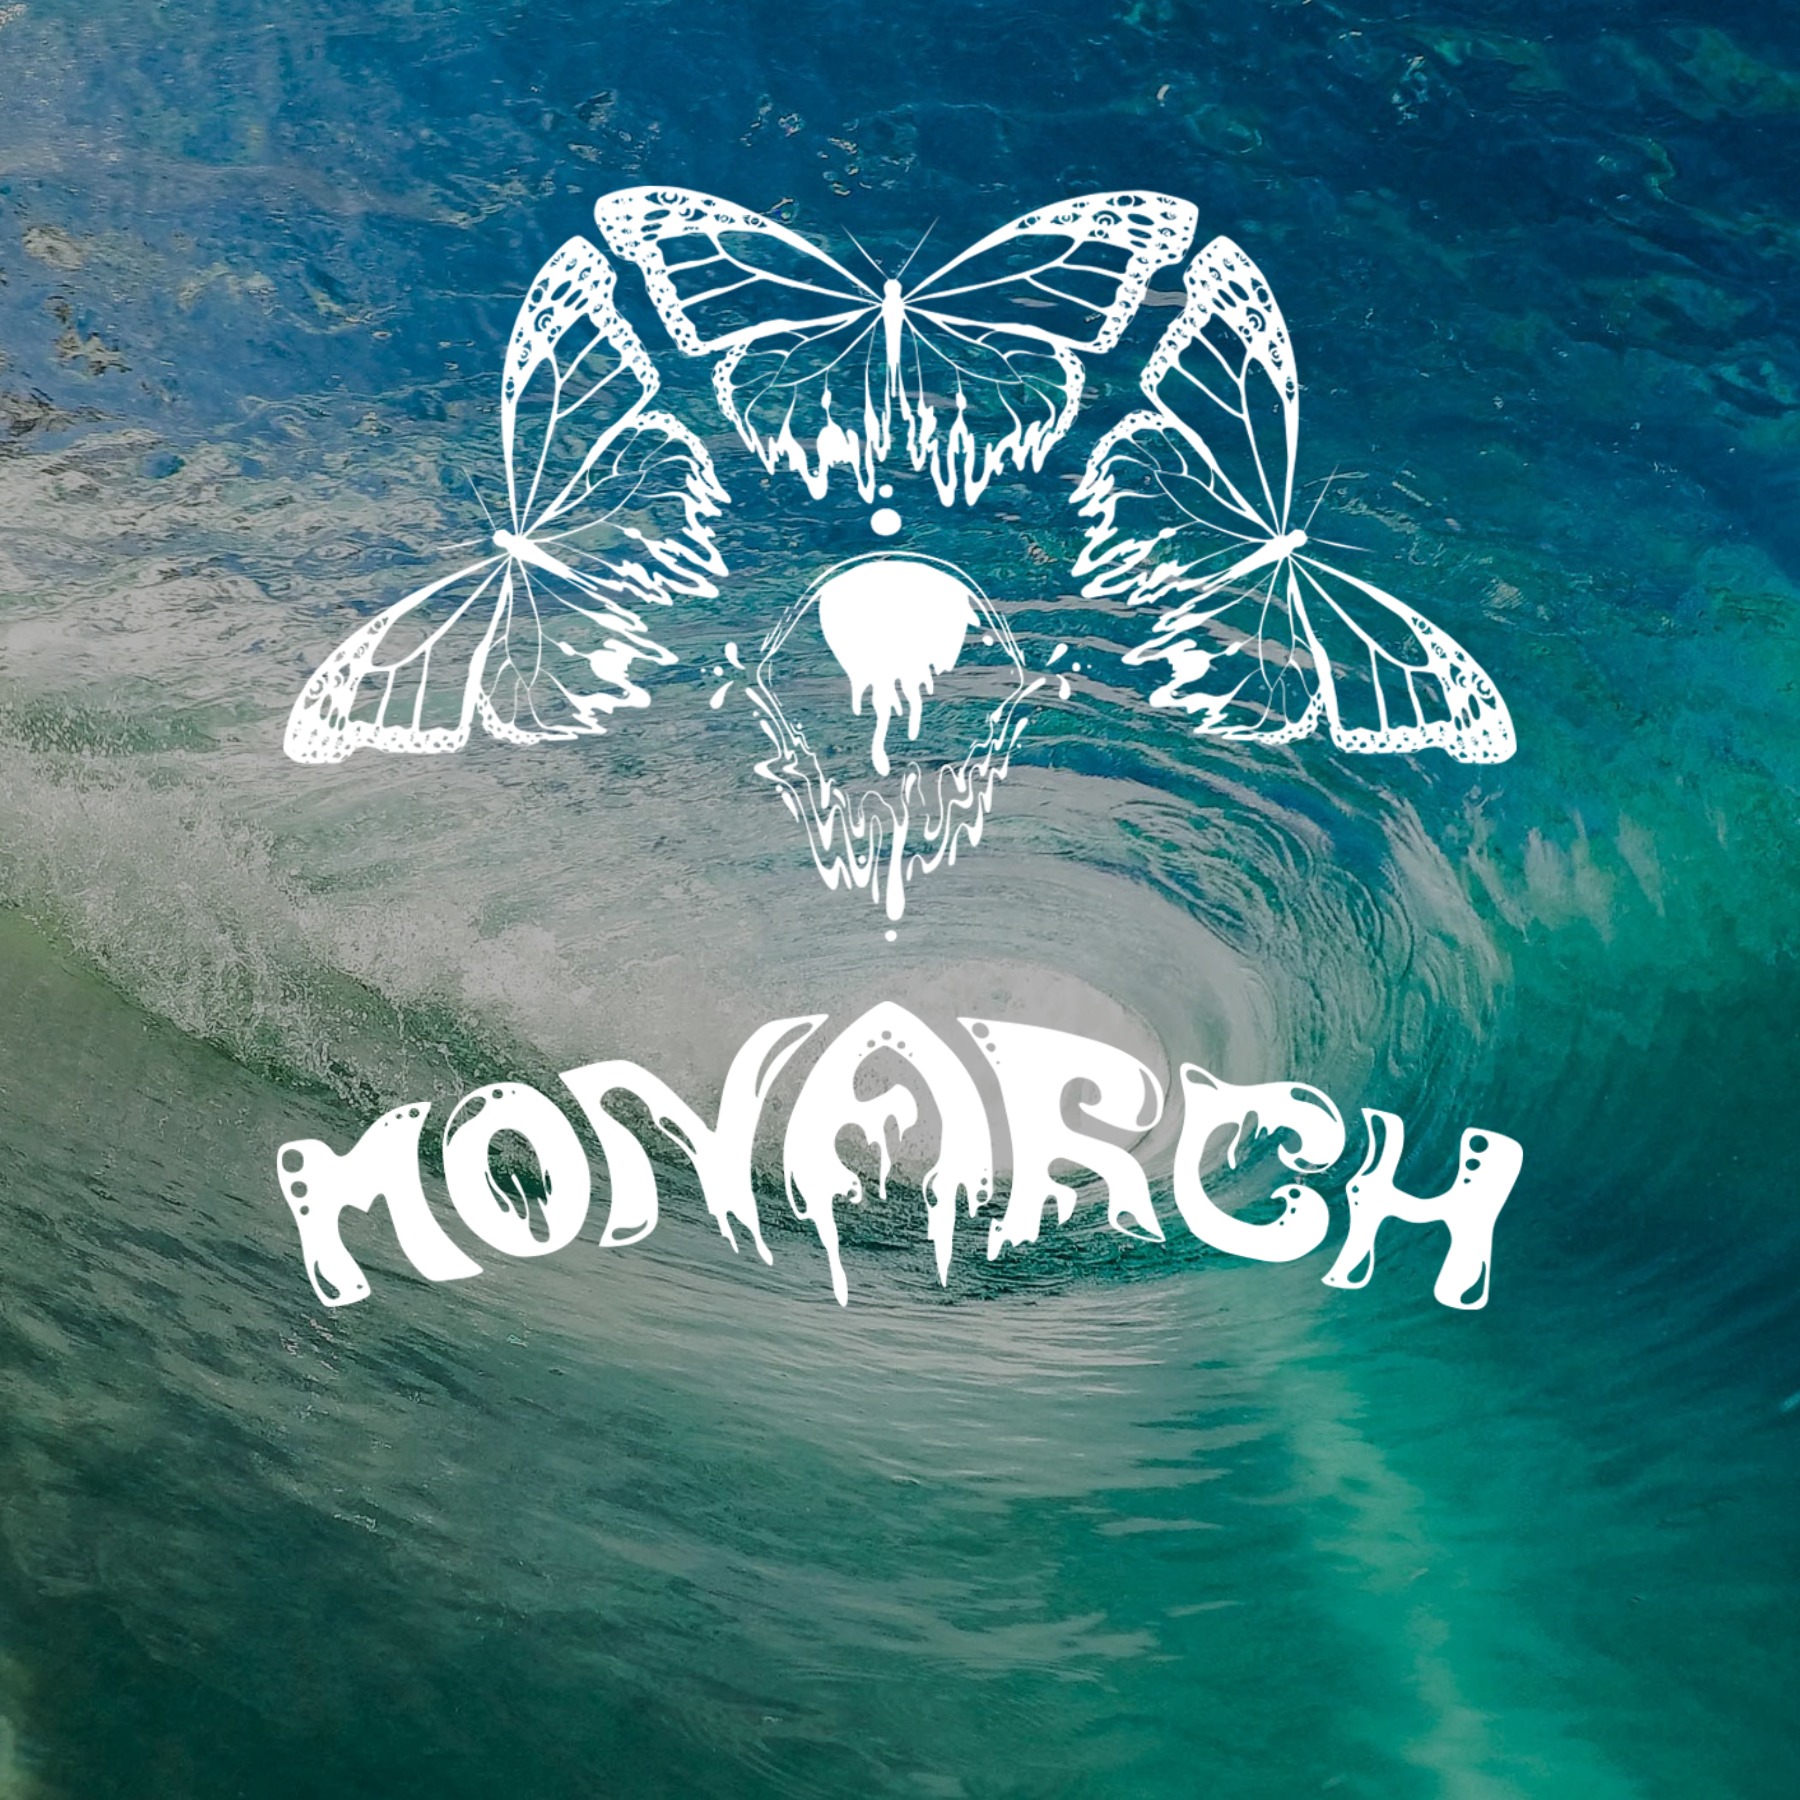 Monarch Surf Logo